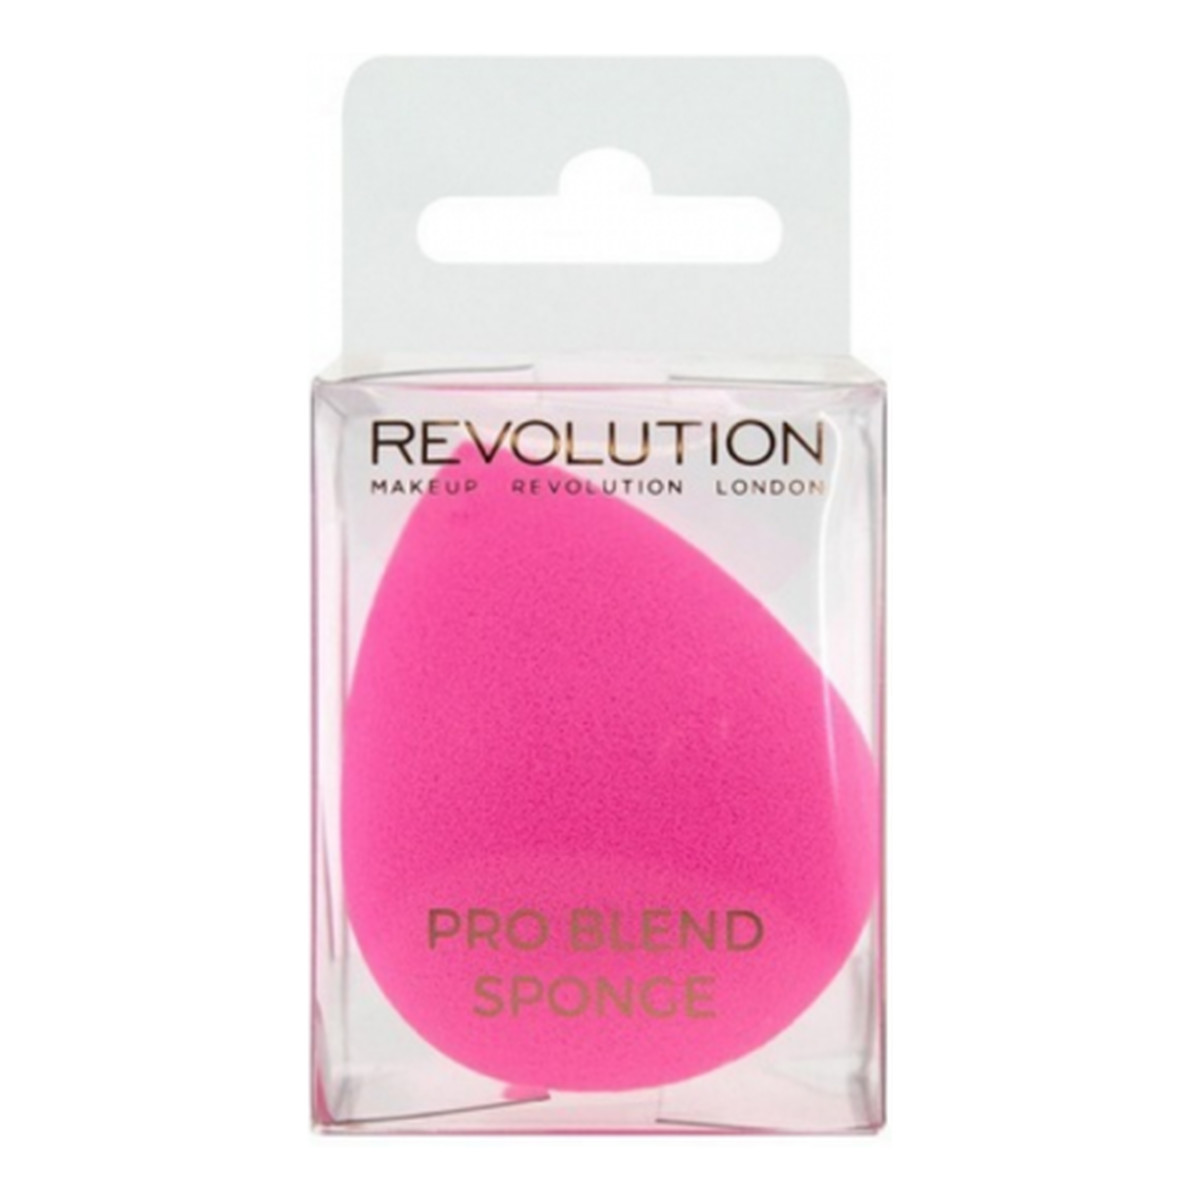 Makeup Revolution Gąbka do makijażu Makeup Revolution Pro Blend Sponge Blender 1 szt.